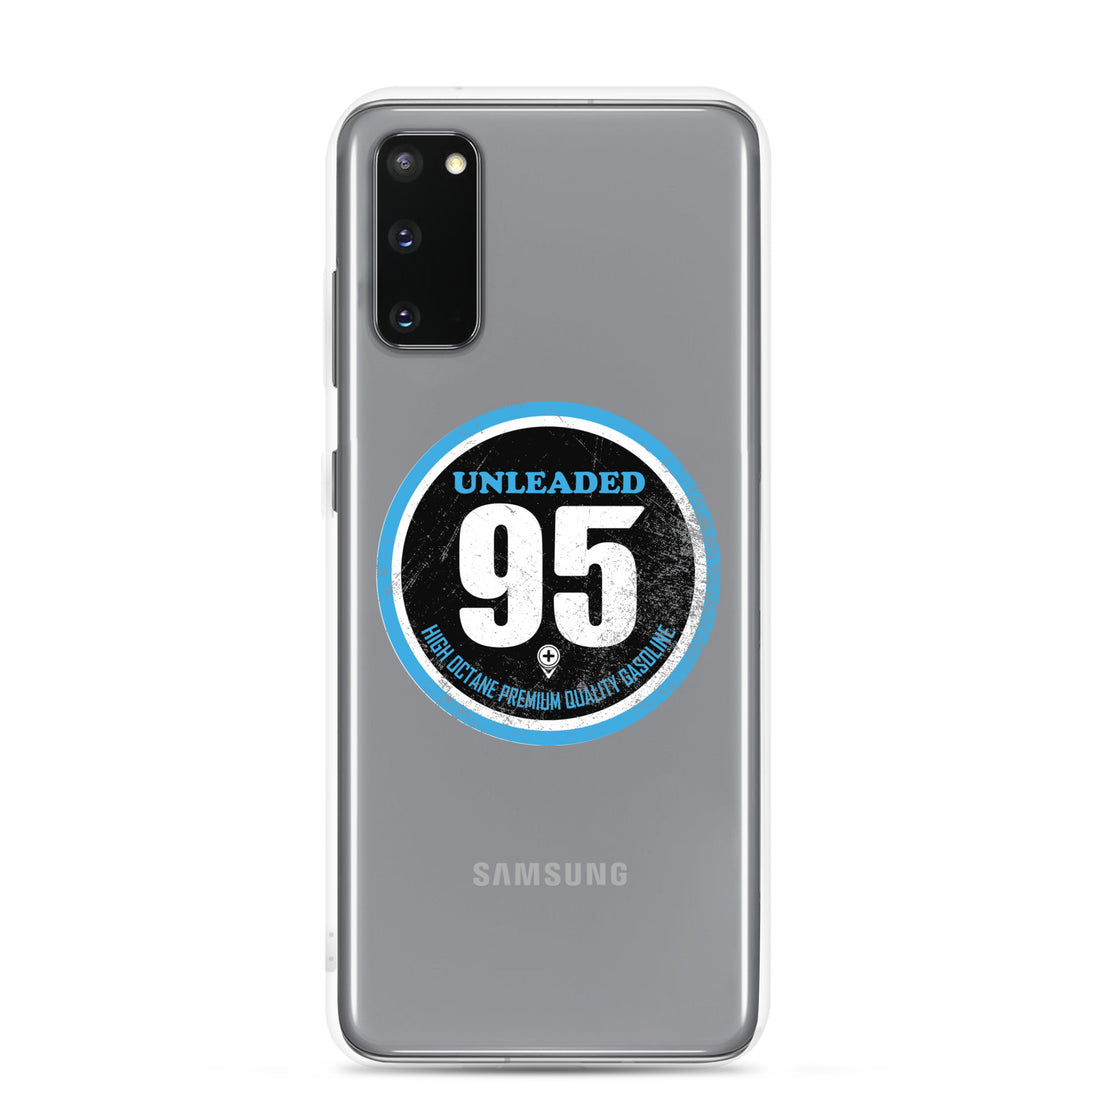 UNLEADED 95 Samsung Case